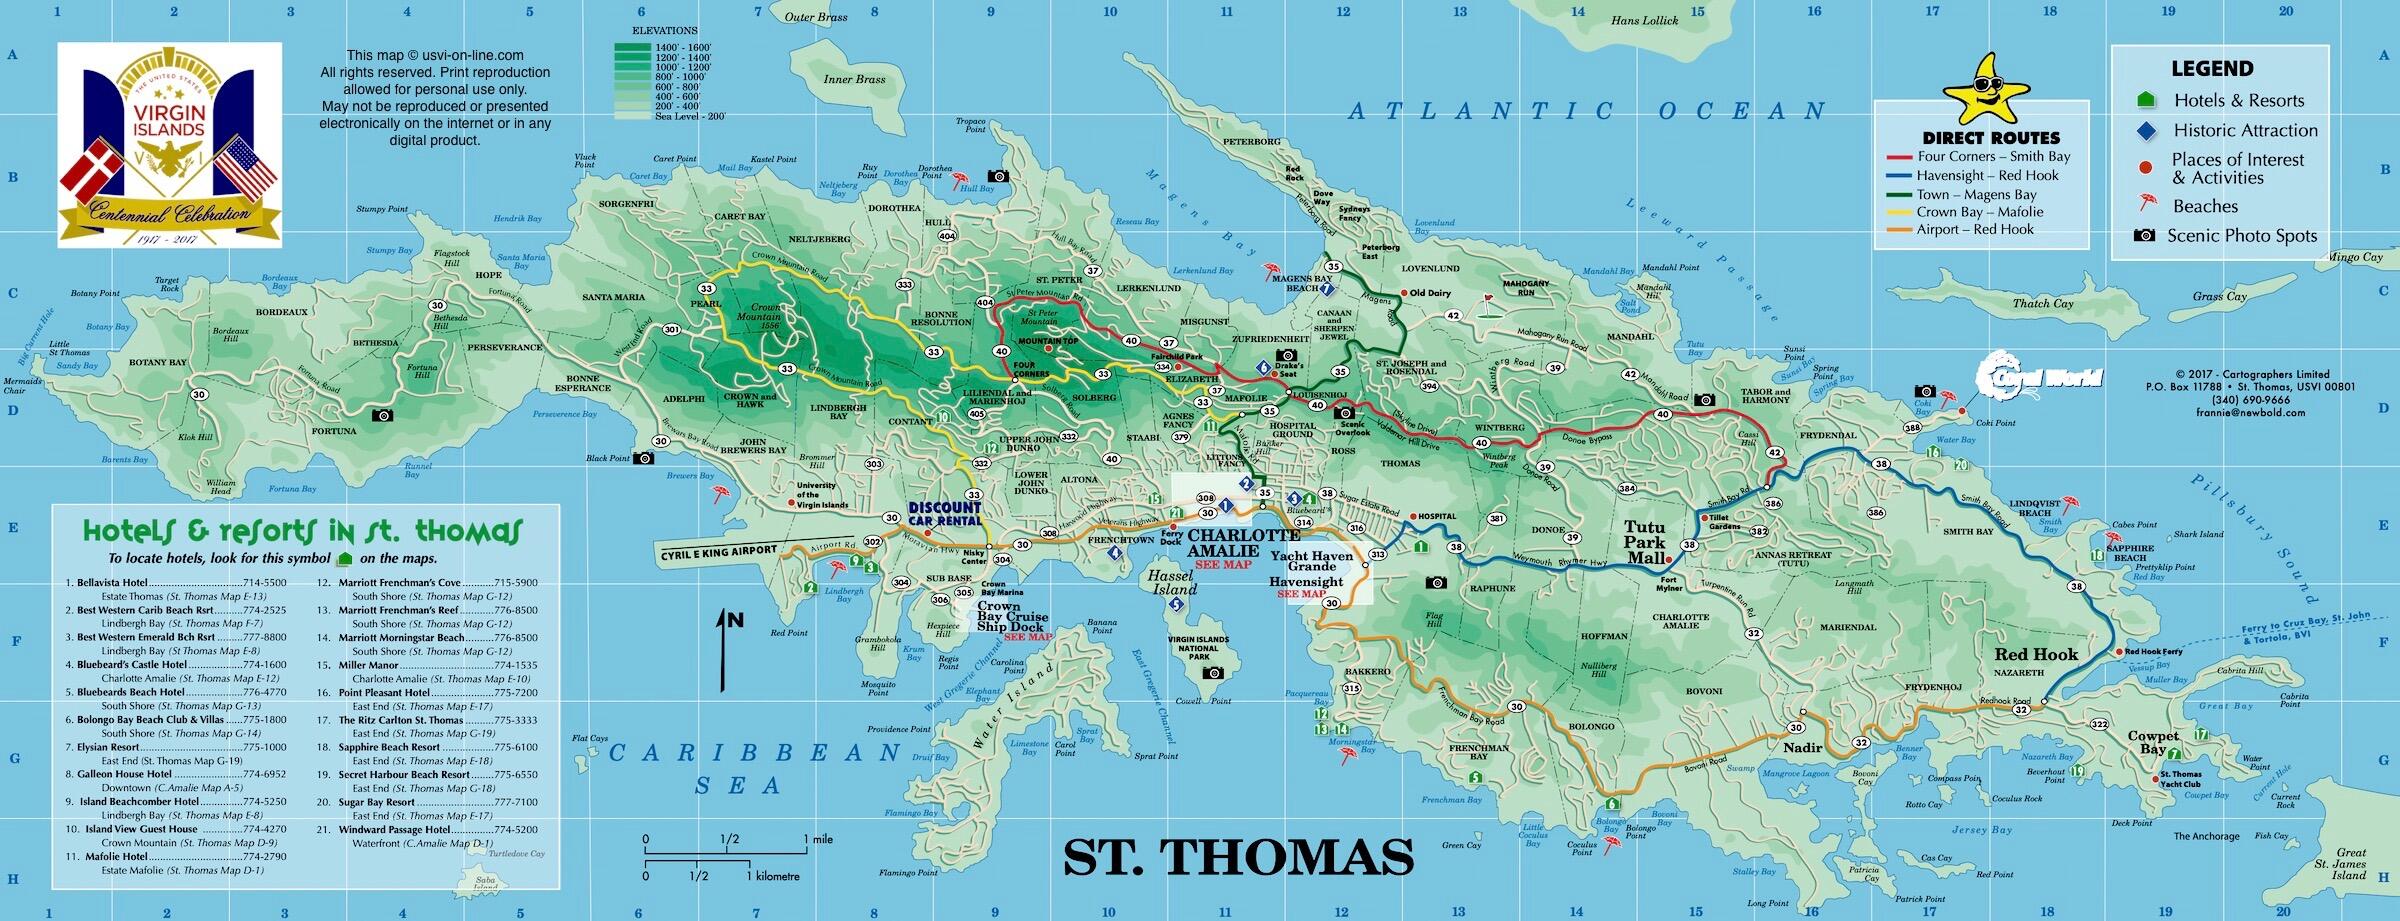 st-thomas-virgin-islands-map.jpg